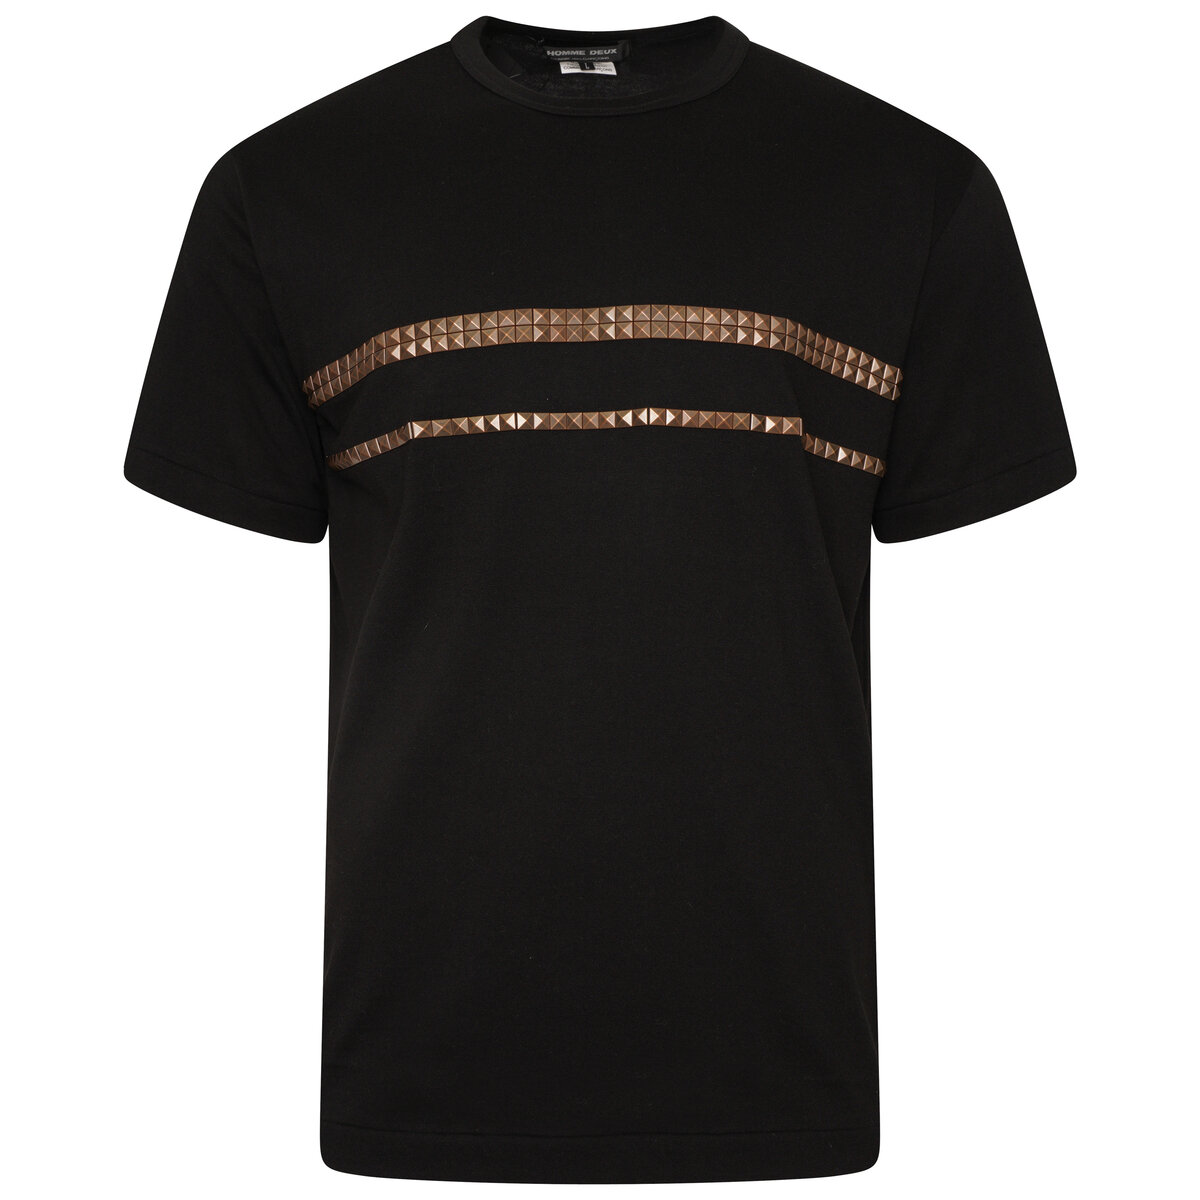 Bronze Studded Black T-shirt L Black